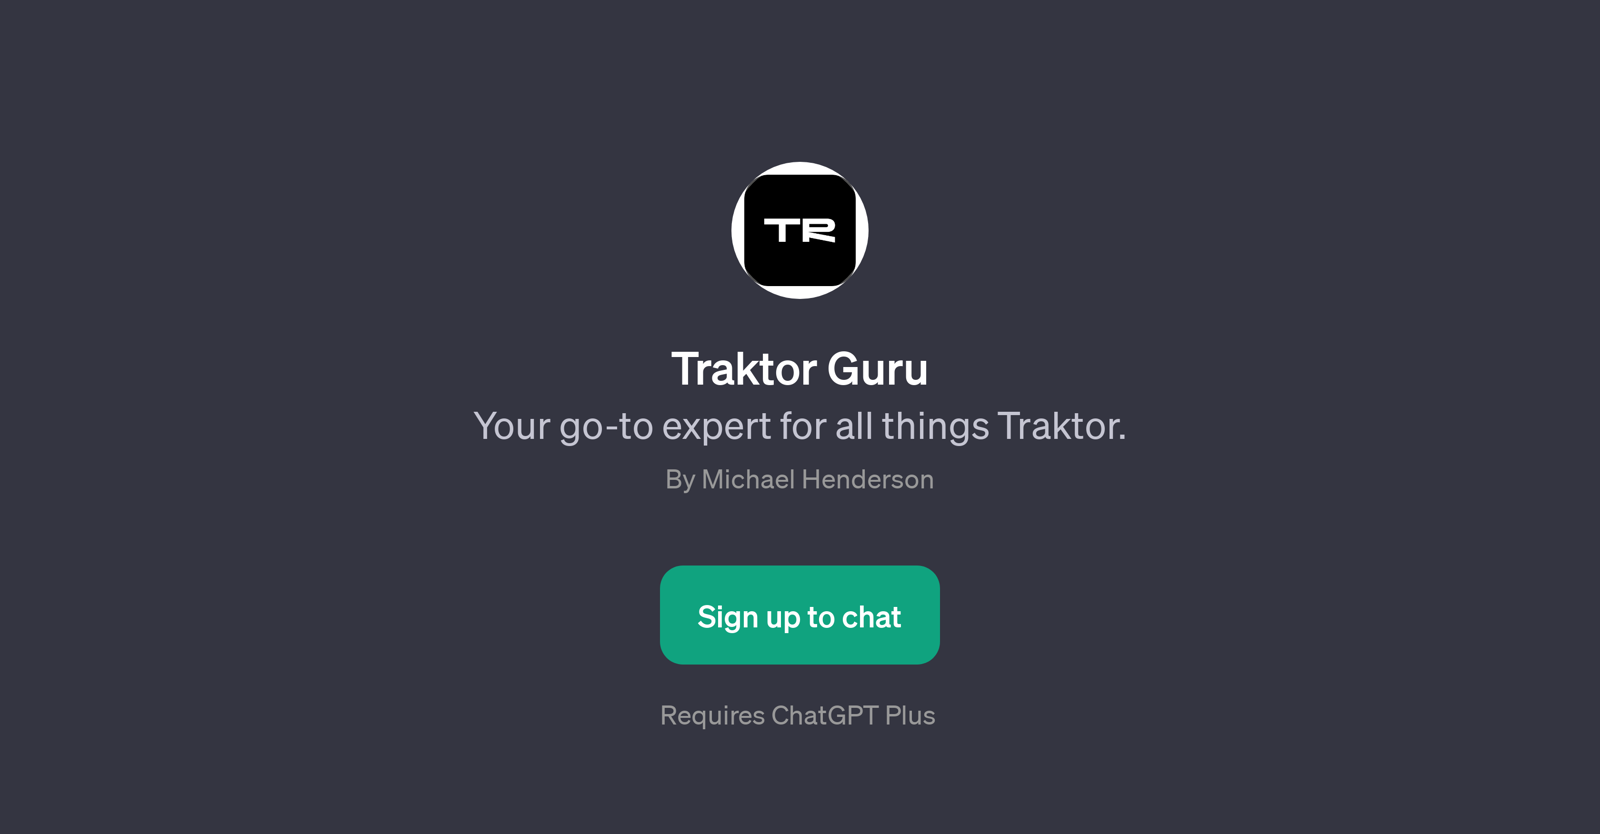 Traktor Guru website